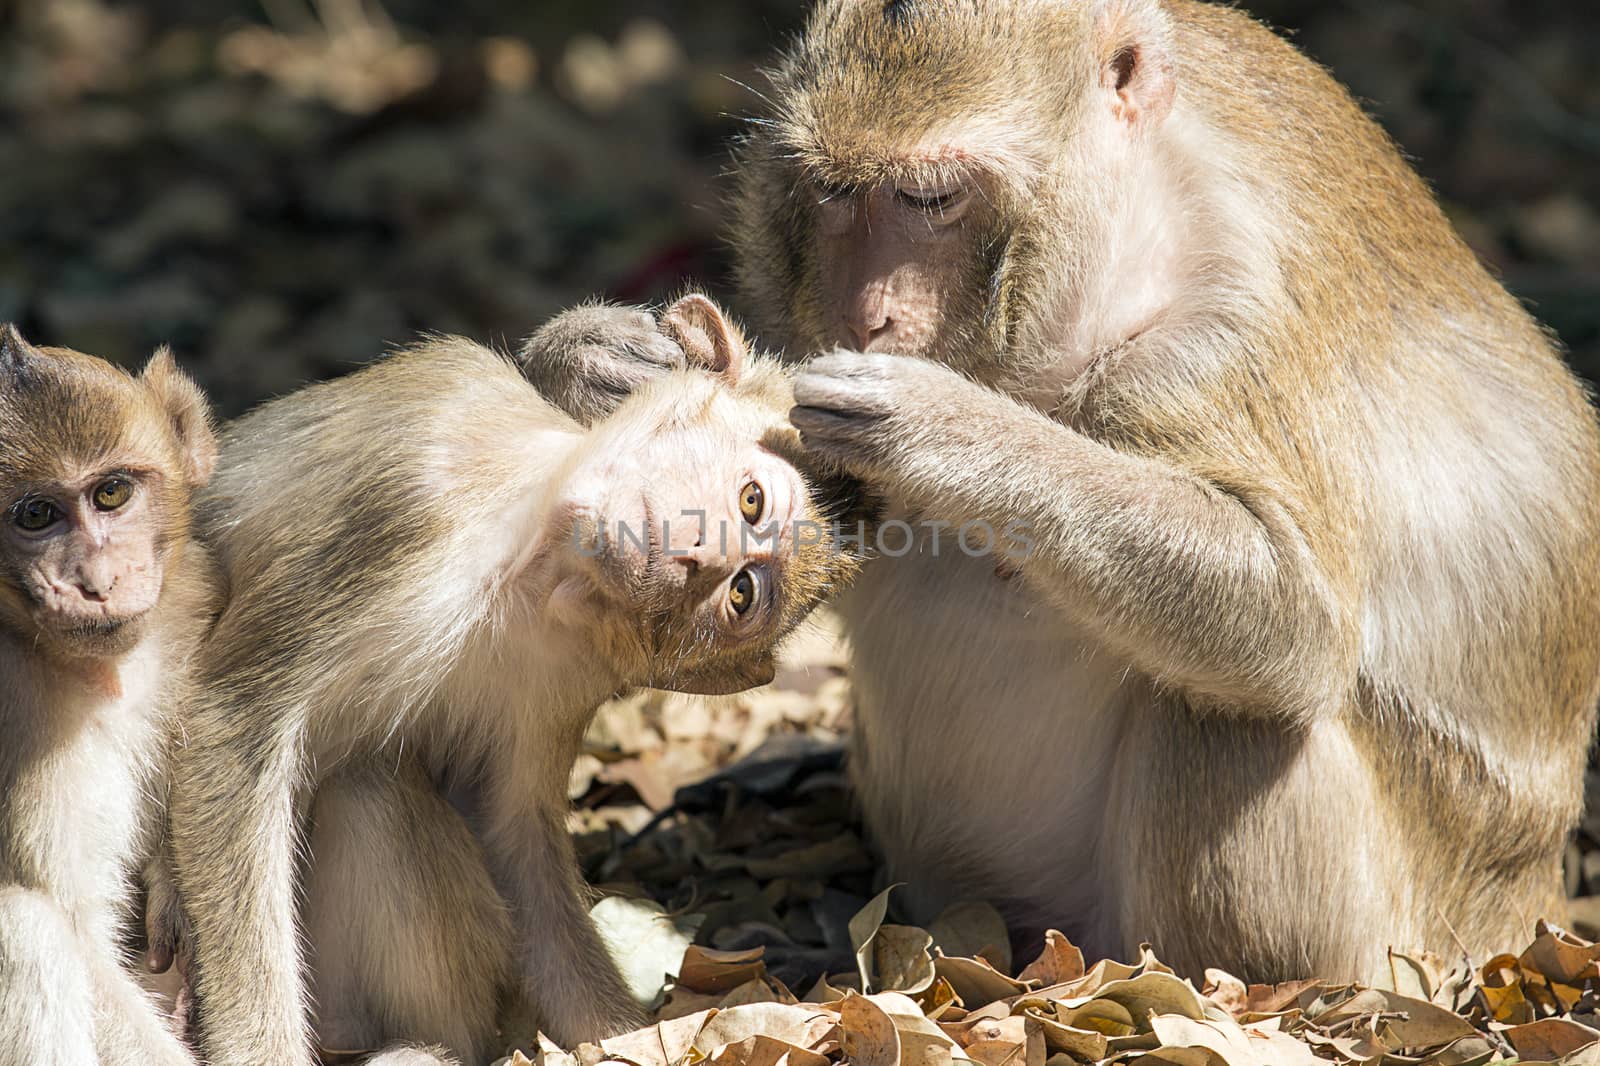 Monkeys love by Chattranusorn09